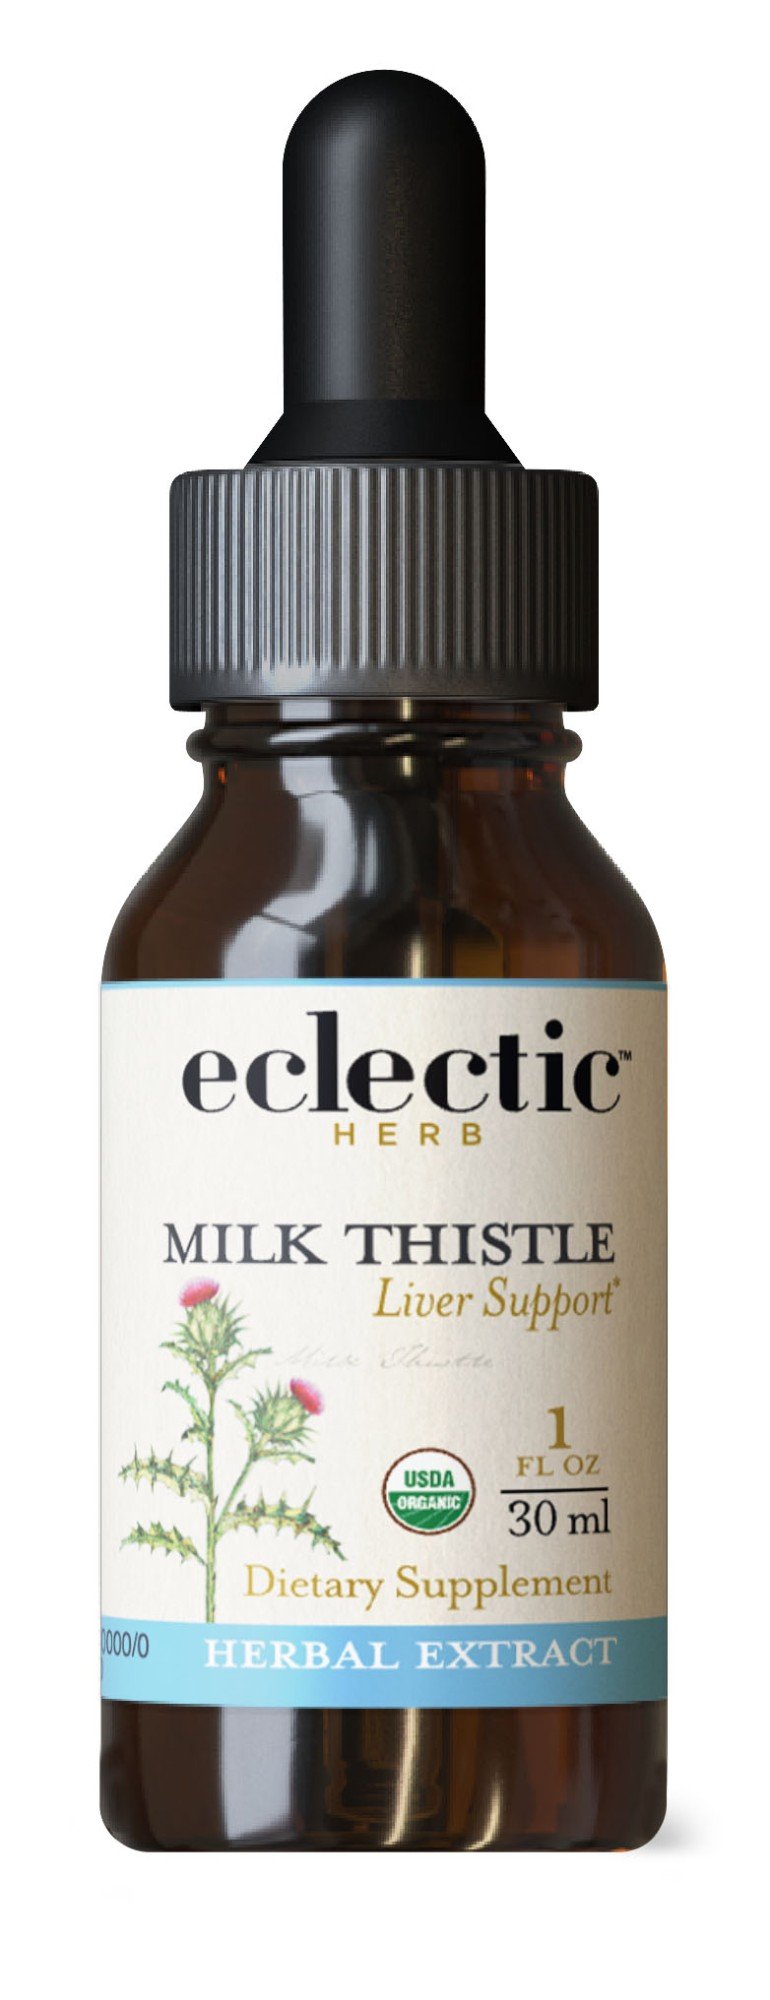 Eclectic Herb Milk Thistle Extract 1 oz Liquid